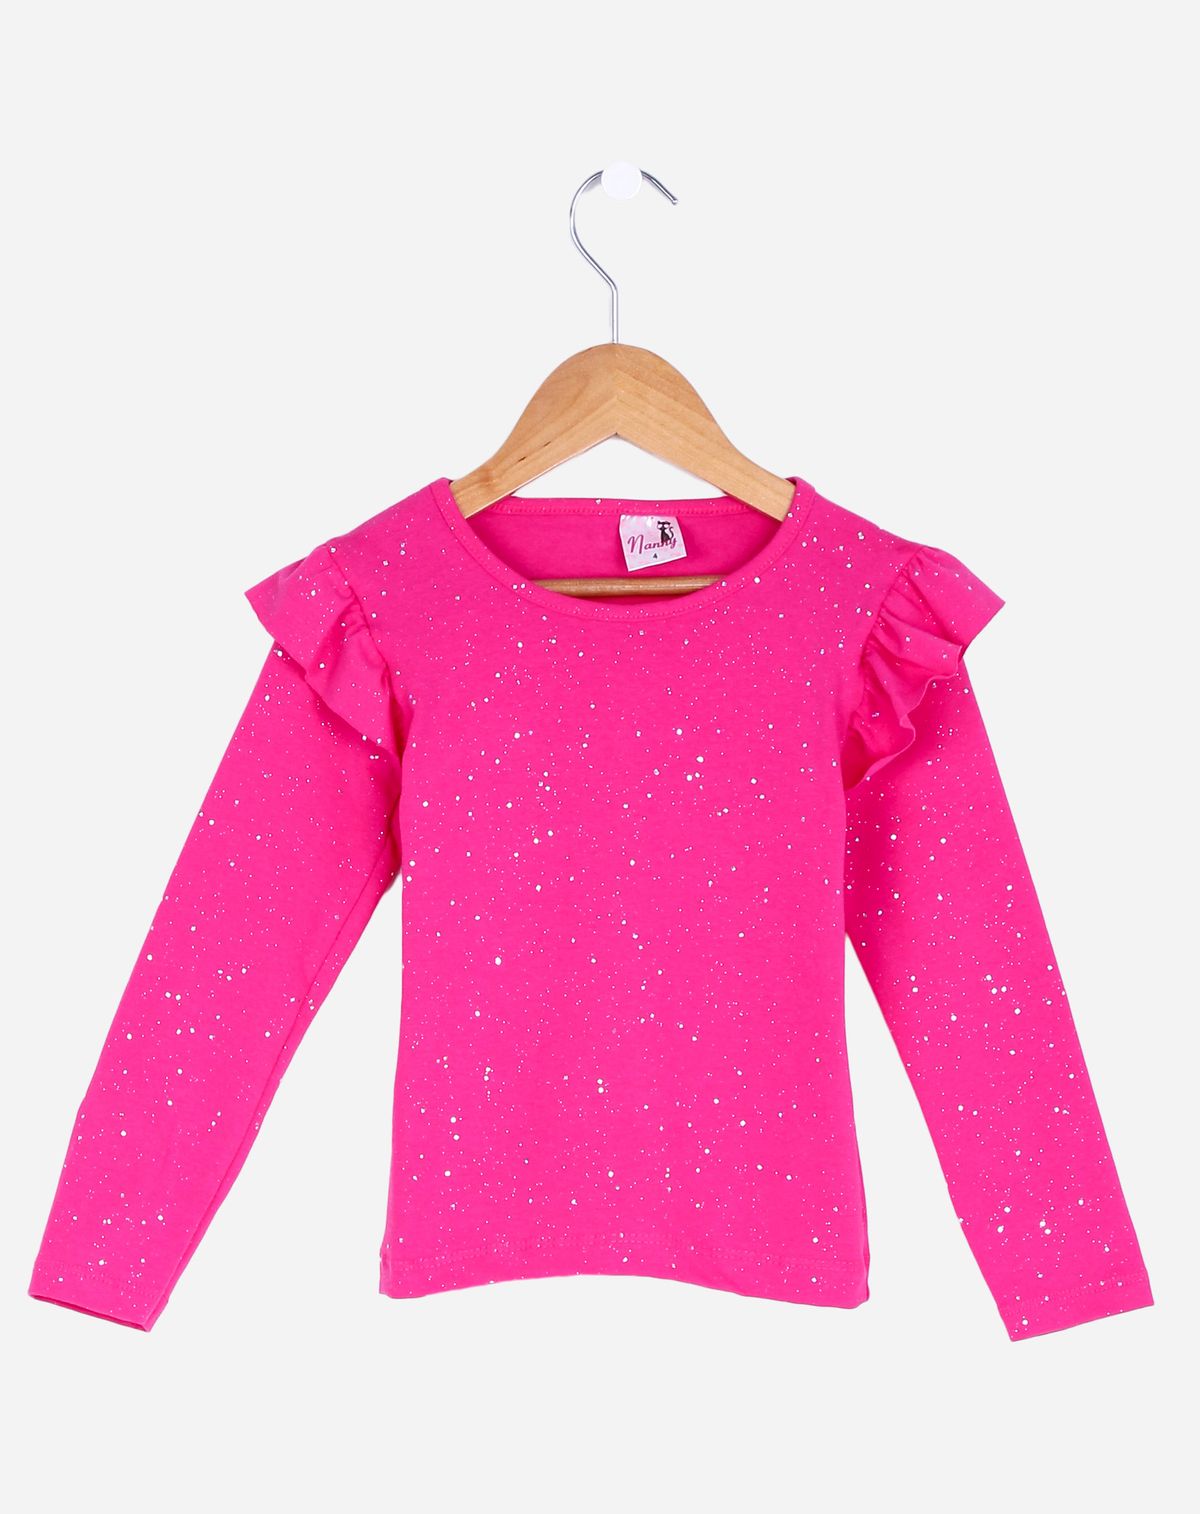 699139004-camiseta-manga-longa-infantil-menina---tam.-4-a-8-anos-pink-10-8a2